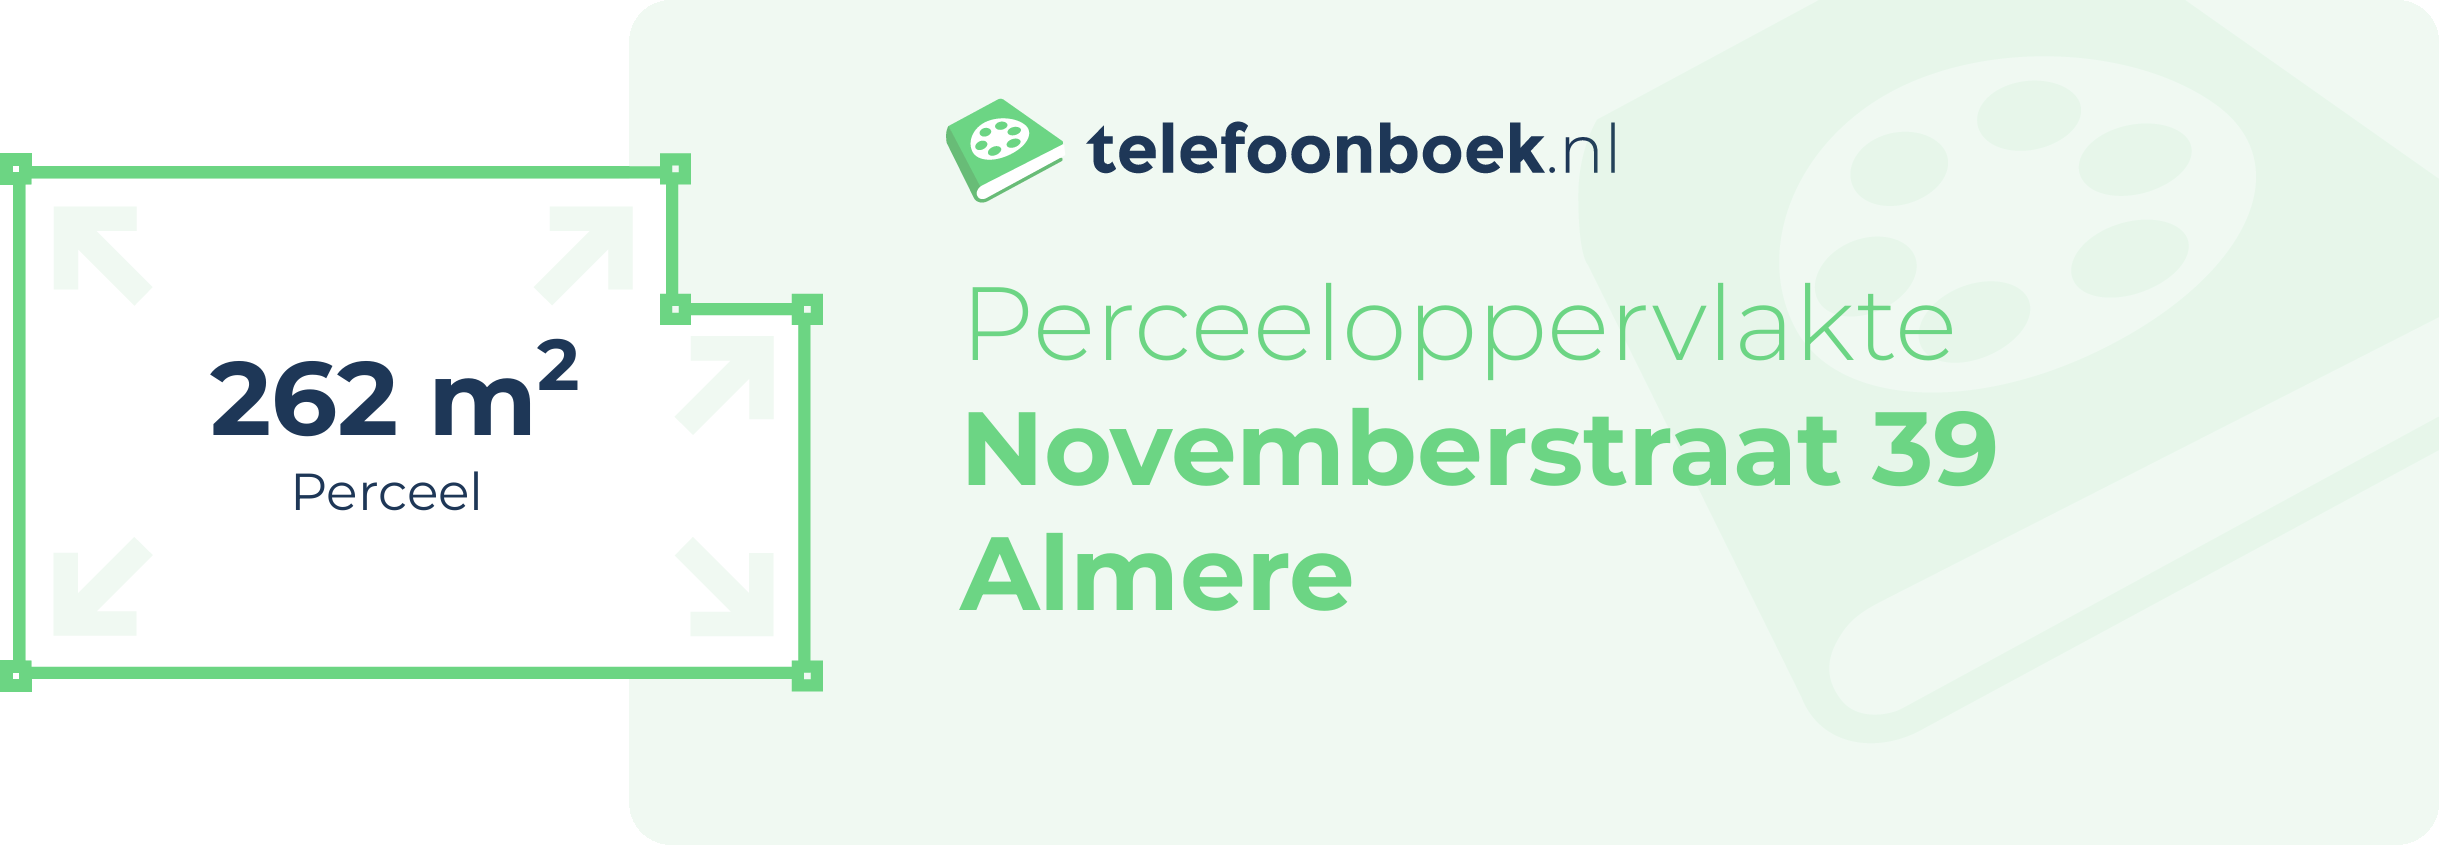 Perceeloppervlakte Novemberstraat 39 Almere